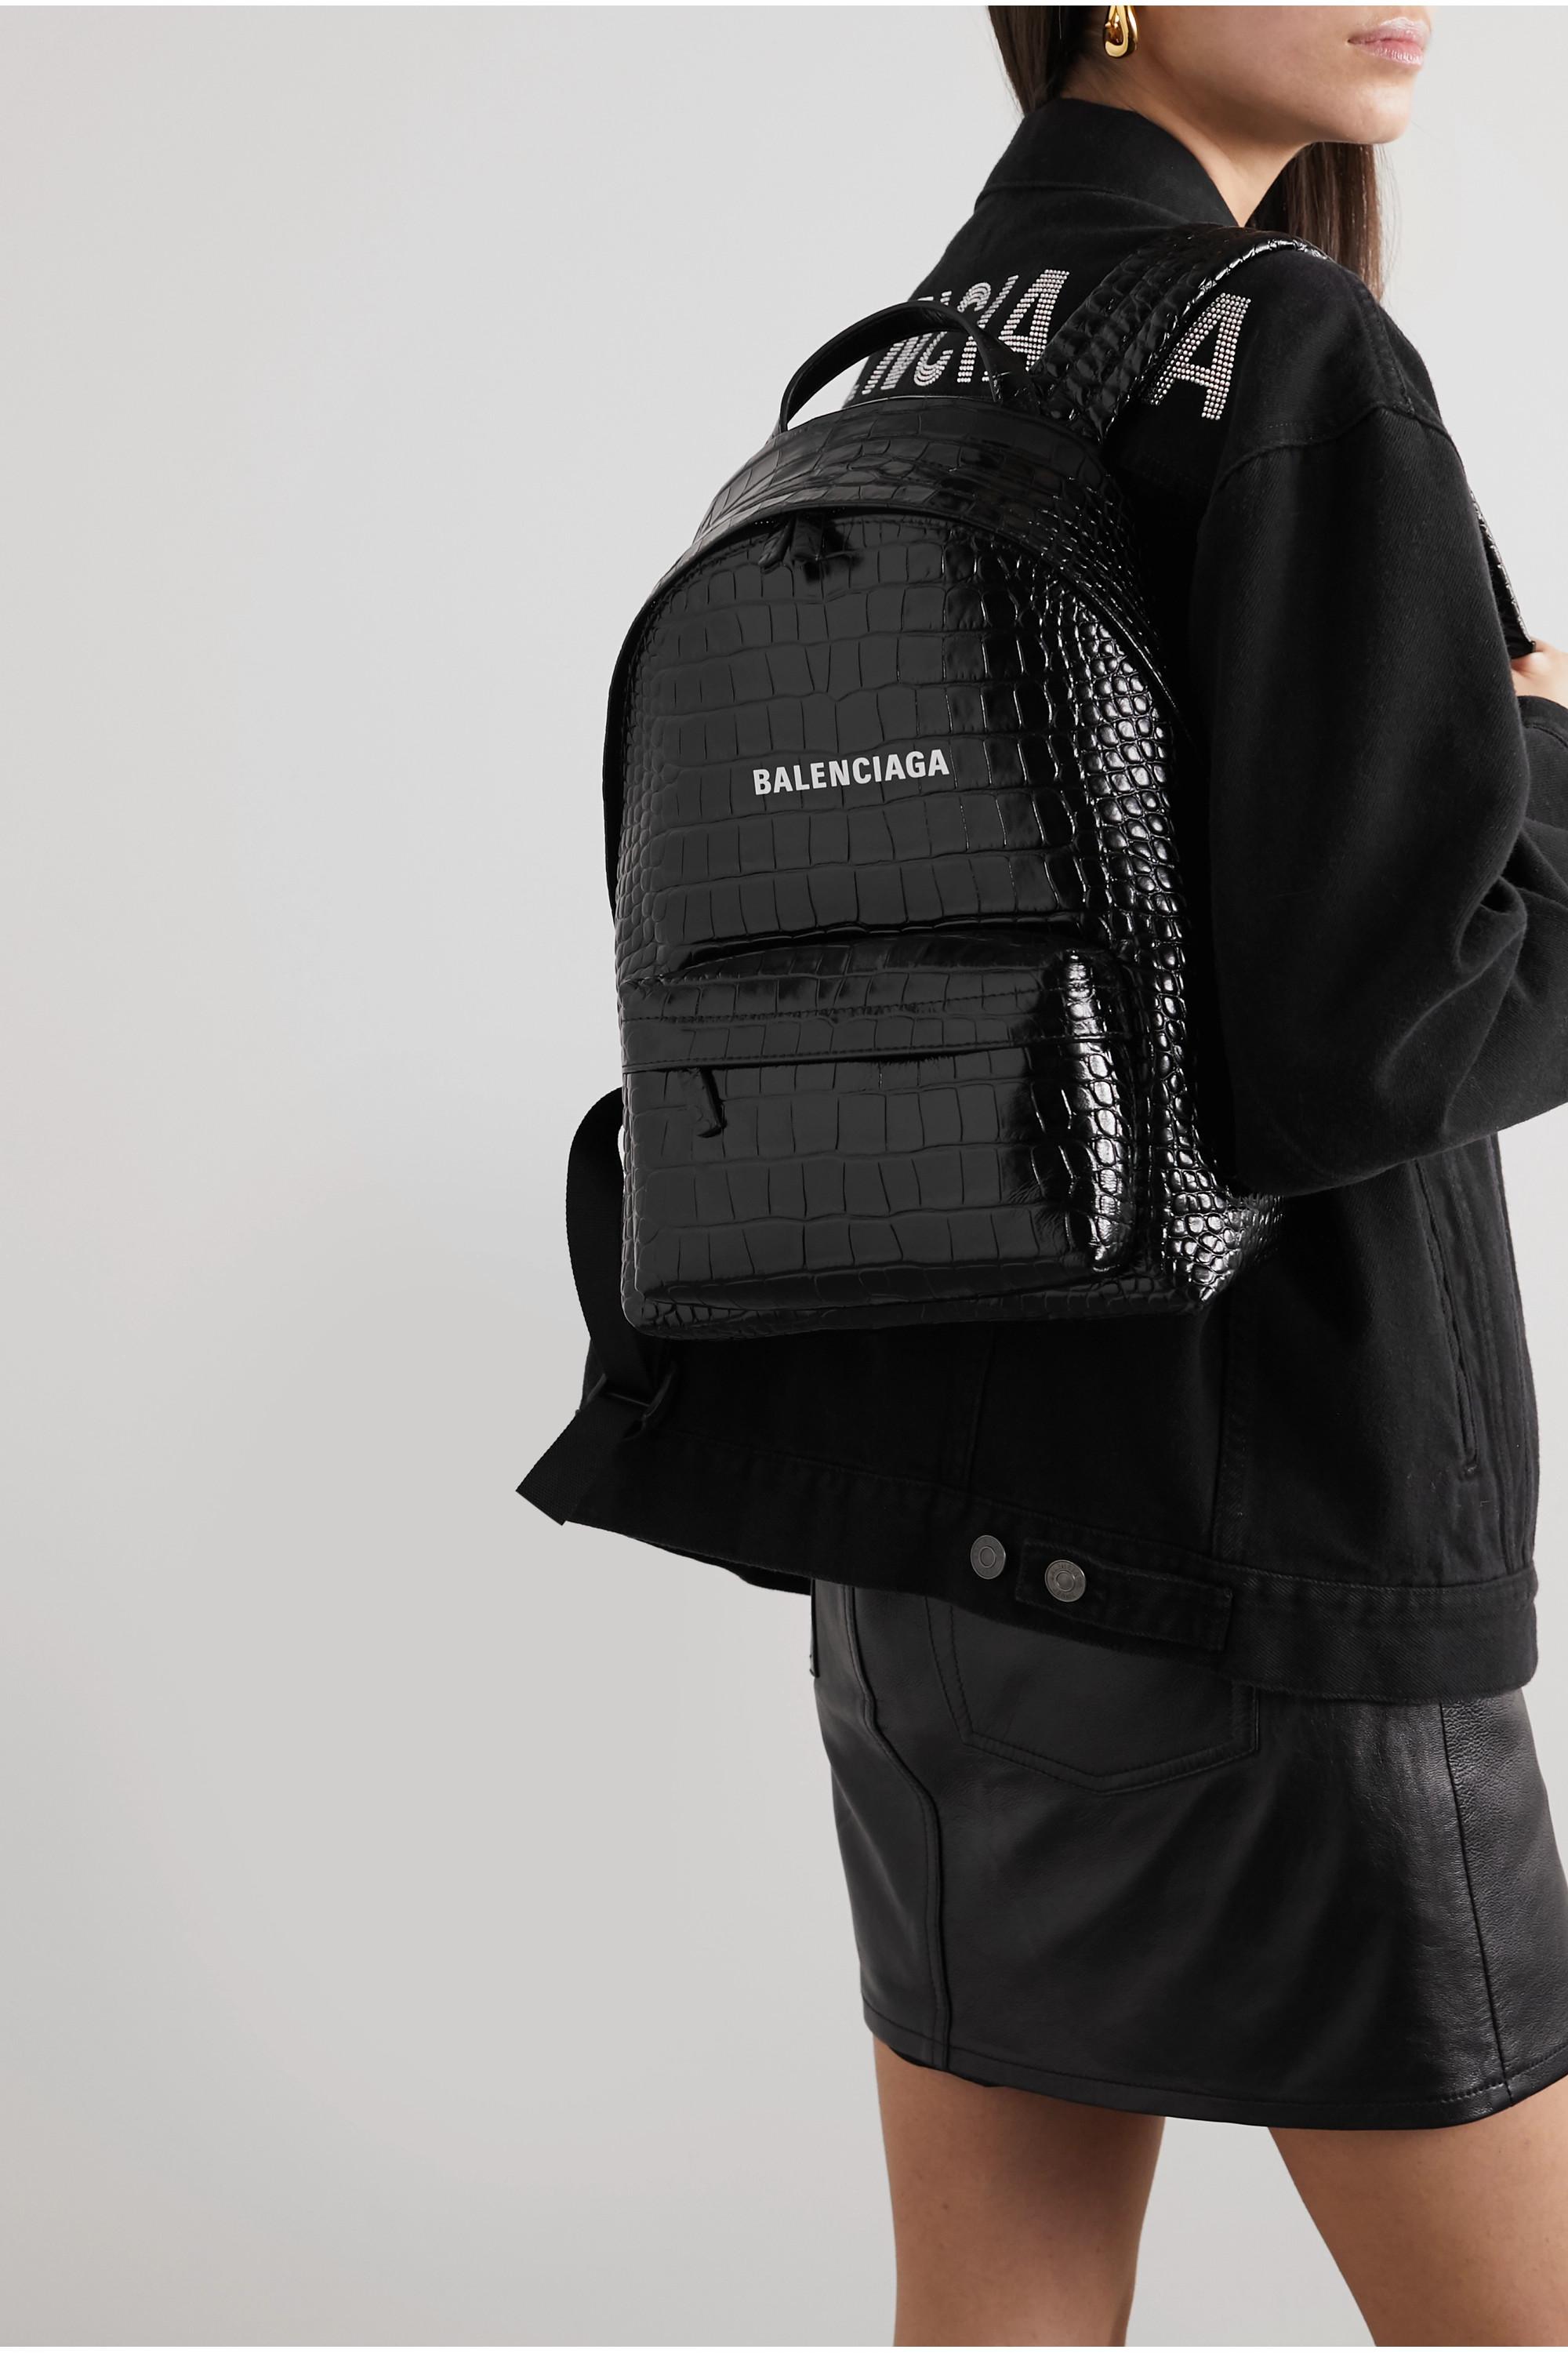 Balenciaga - Everyday Leather Backpack, Men, Black